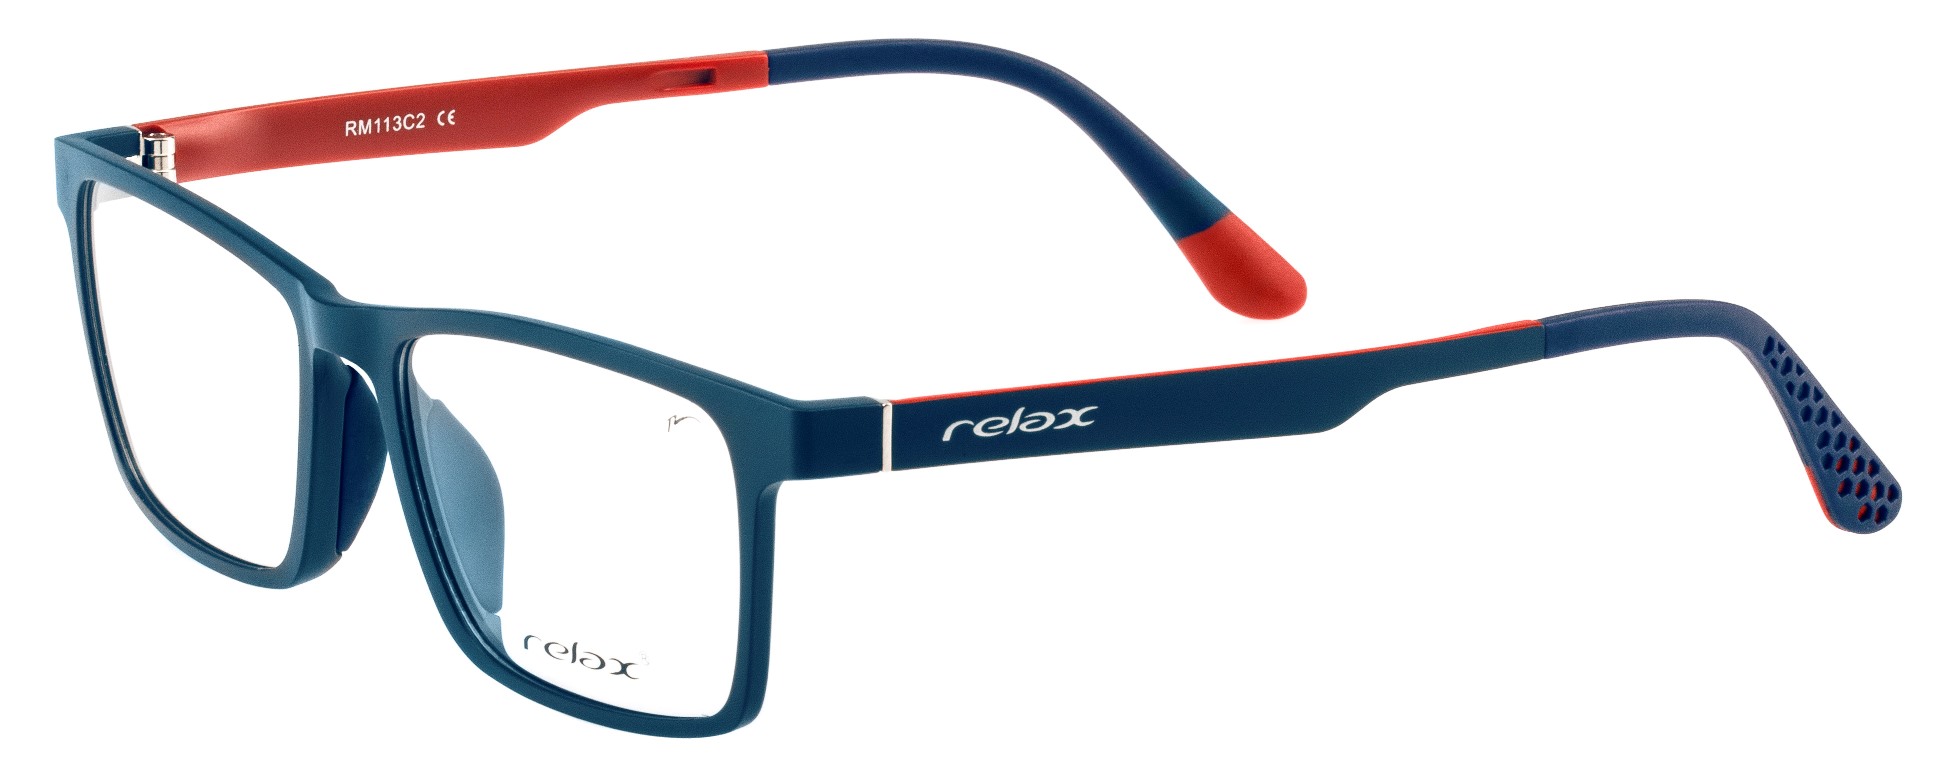 Optical frames Relax Dafi RM113C2